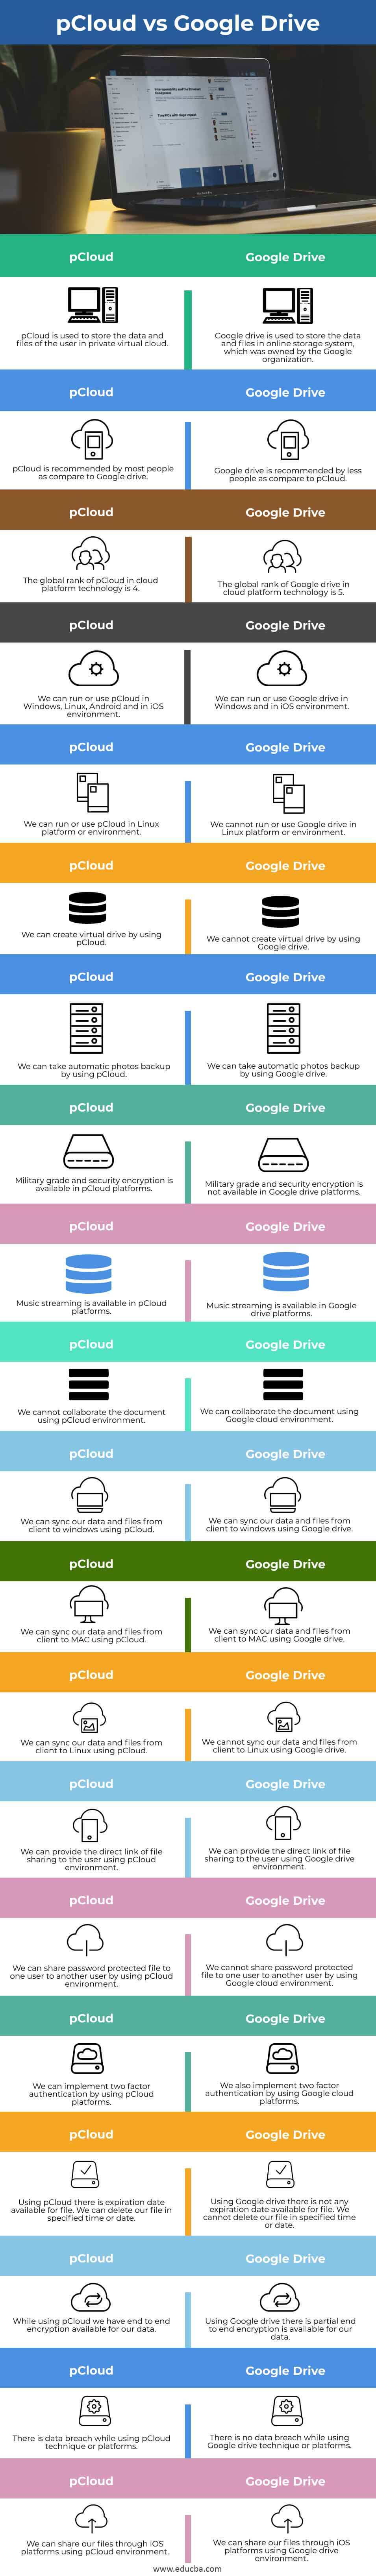 pCloud-vs-Google-Drive-info